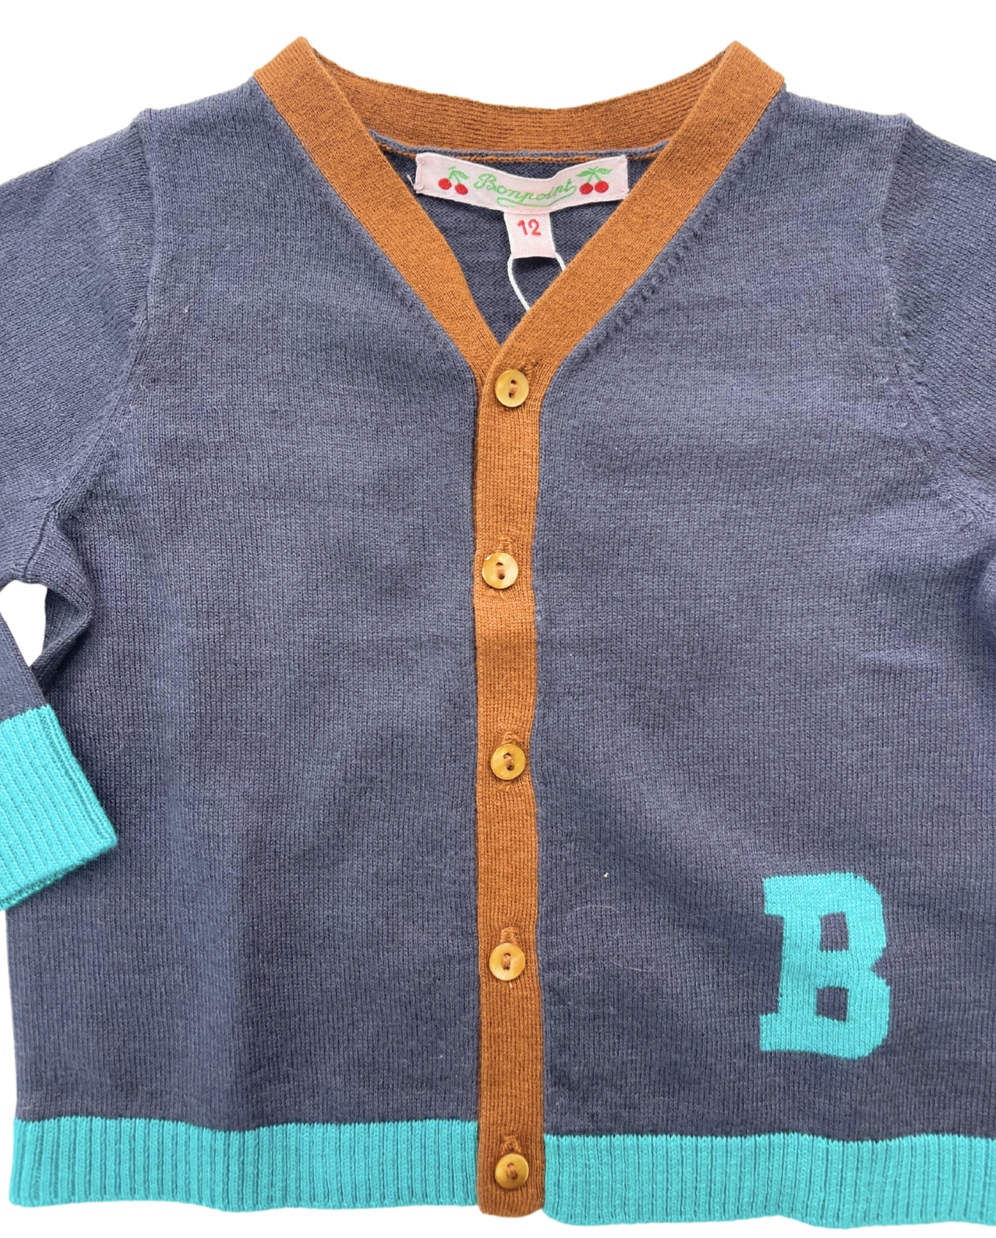 BONPOINT - Cardigan bleu ardoise « B » (neuf) - 12 mois